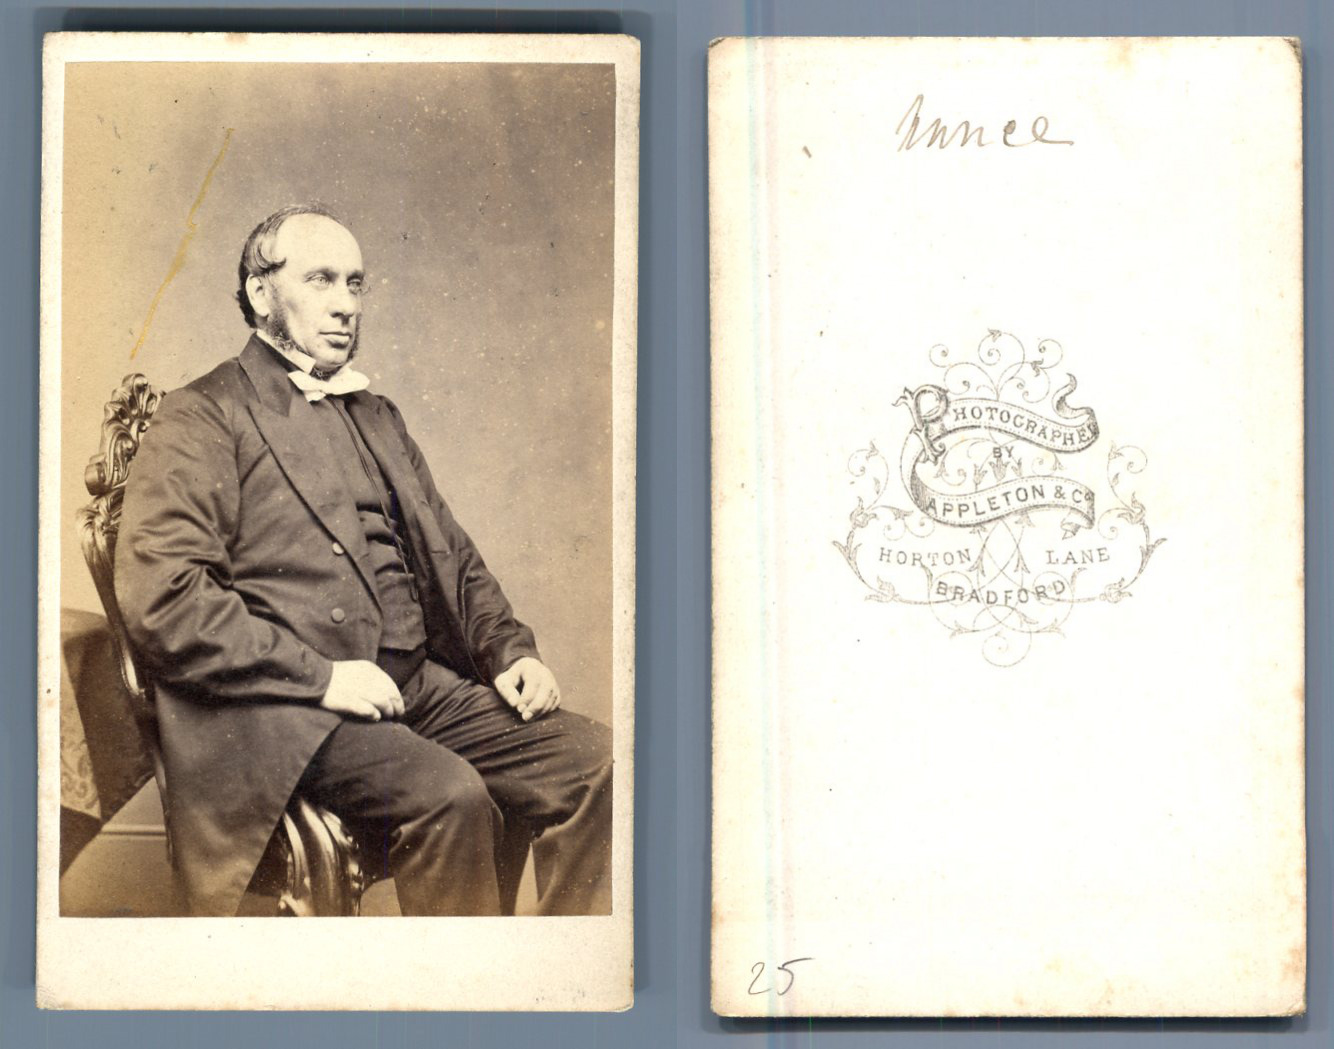 Reverend James Nance, Methodist Church CDV, Appleton &Co., Bradford. Card of 